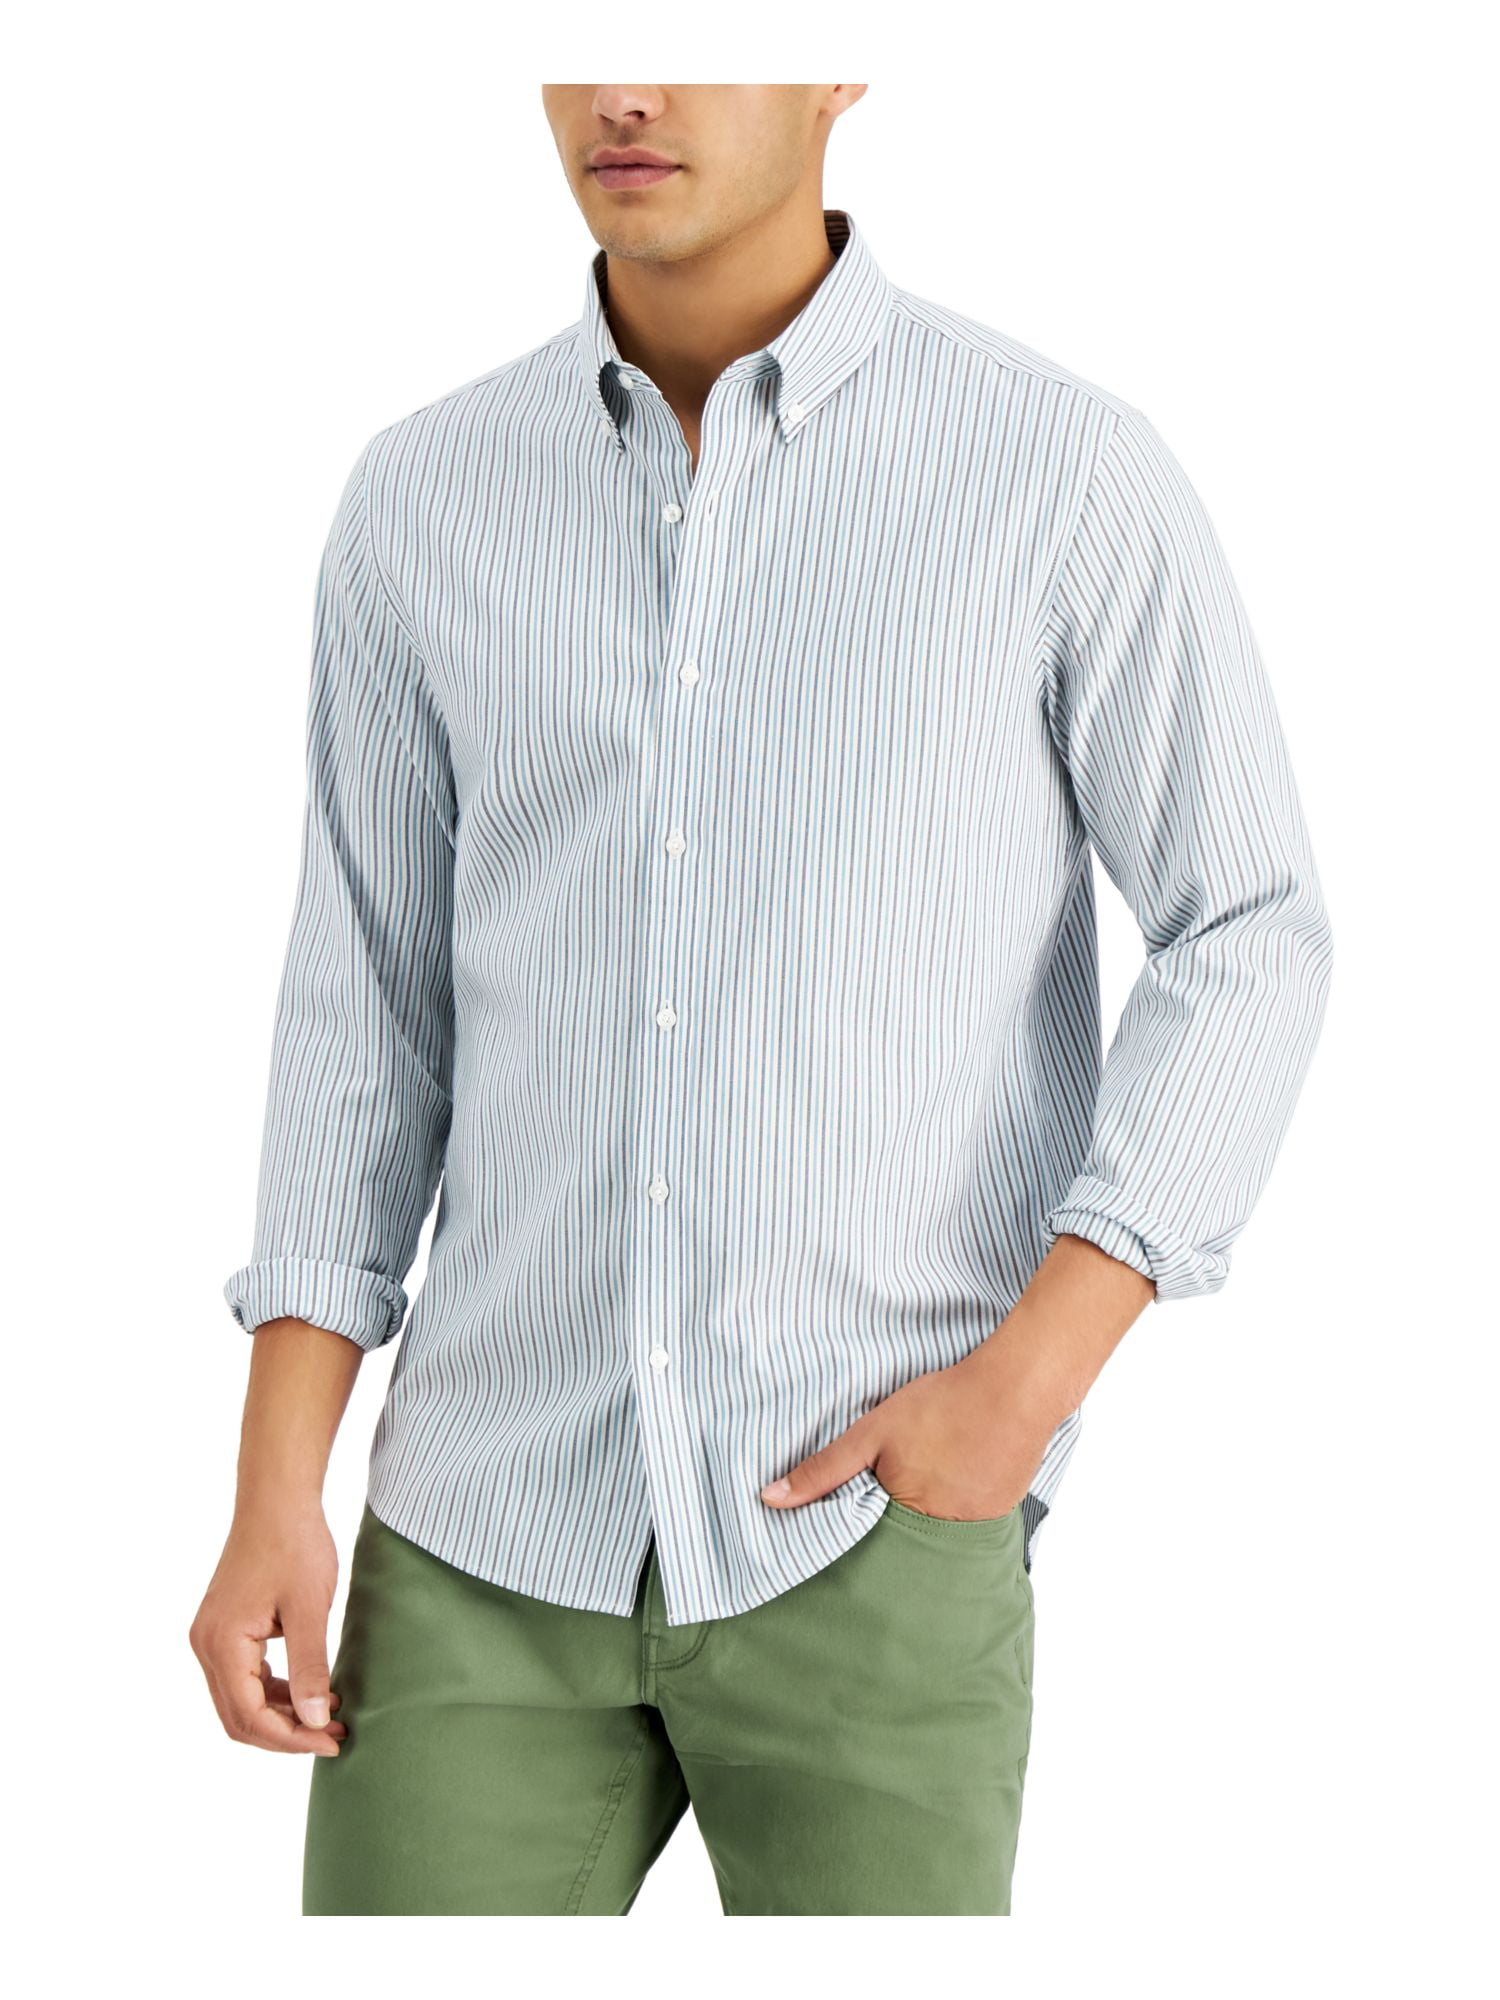 MICHAEL KORS Mens Green Pinstripe Long Sleeve Collared Slim Fit Button Down  Cotton Cotton Shirt L 